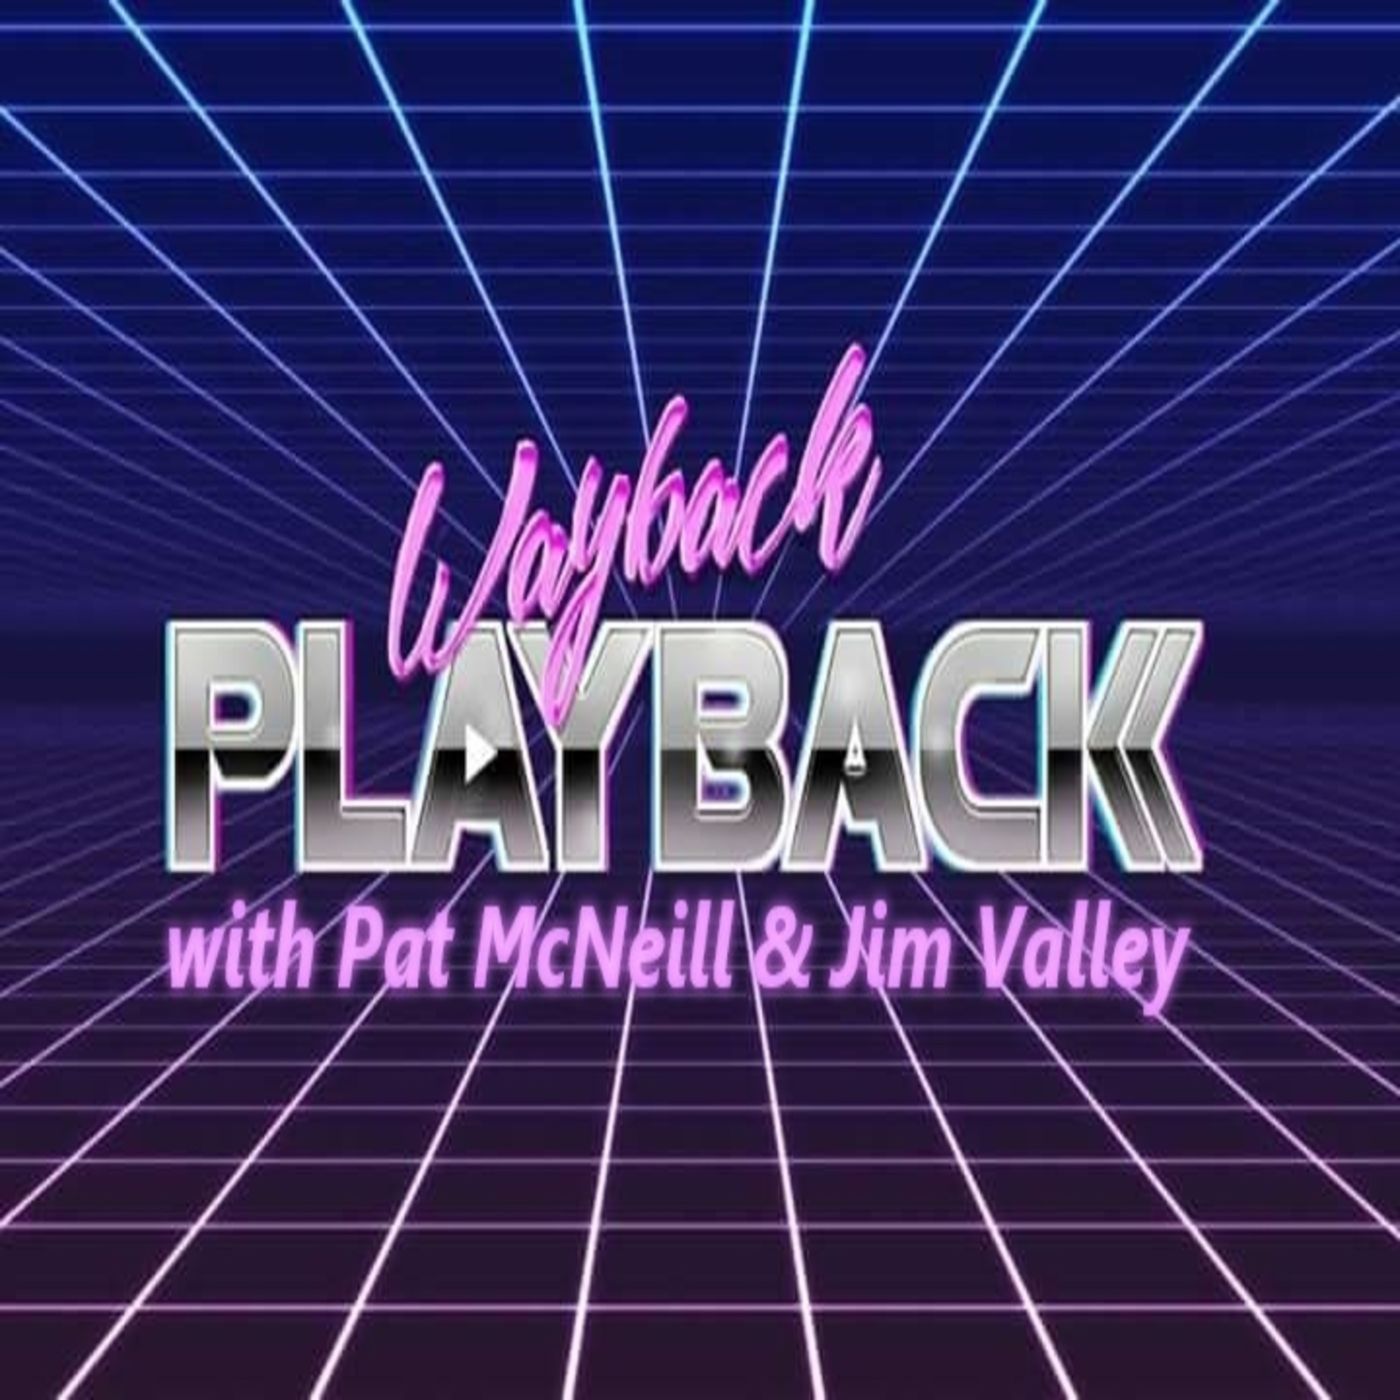 Wayback Playback with Pat McNeill & Shane Shadows